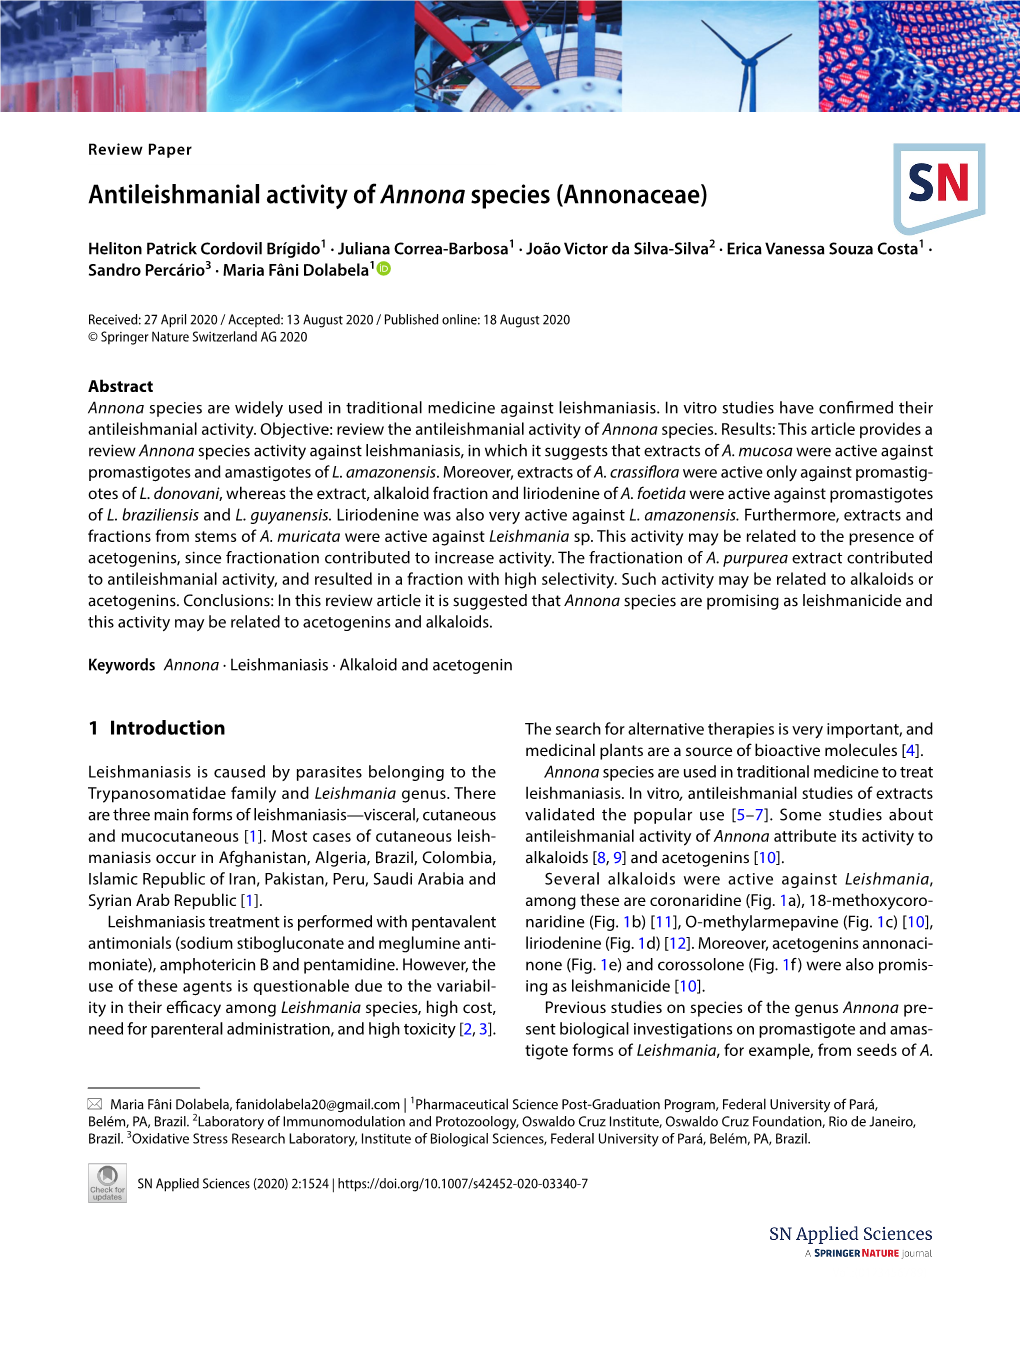 Antileishmanial Activity of Annona Species (Annonaceae)